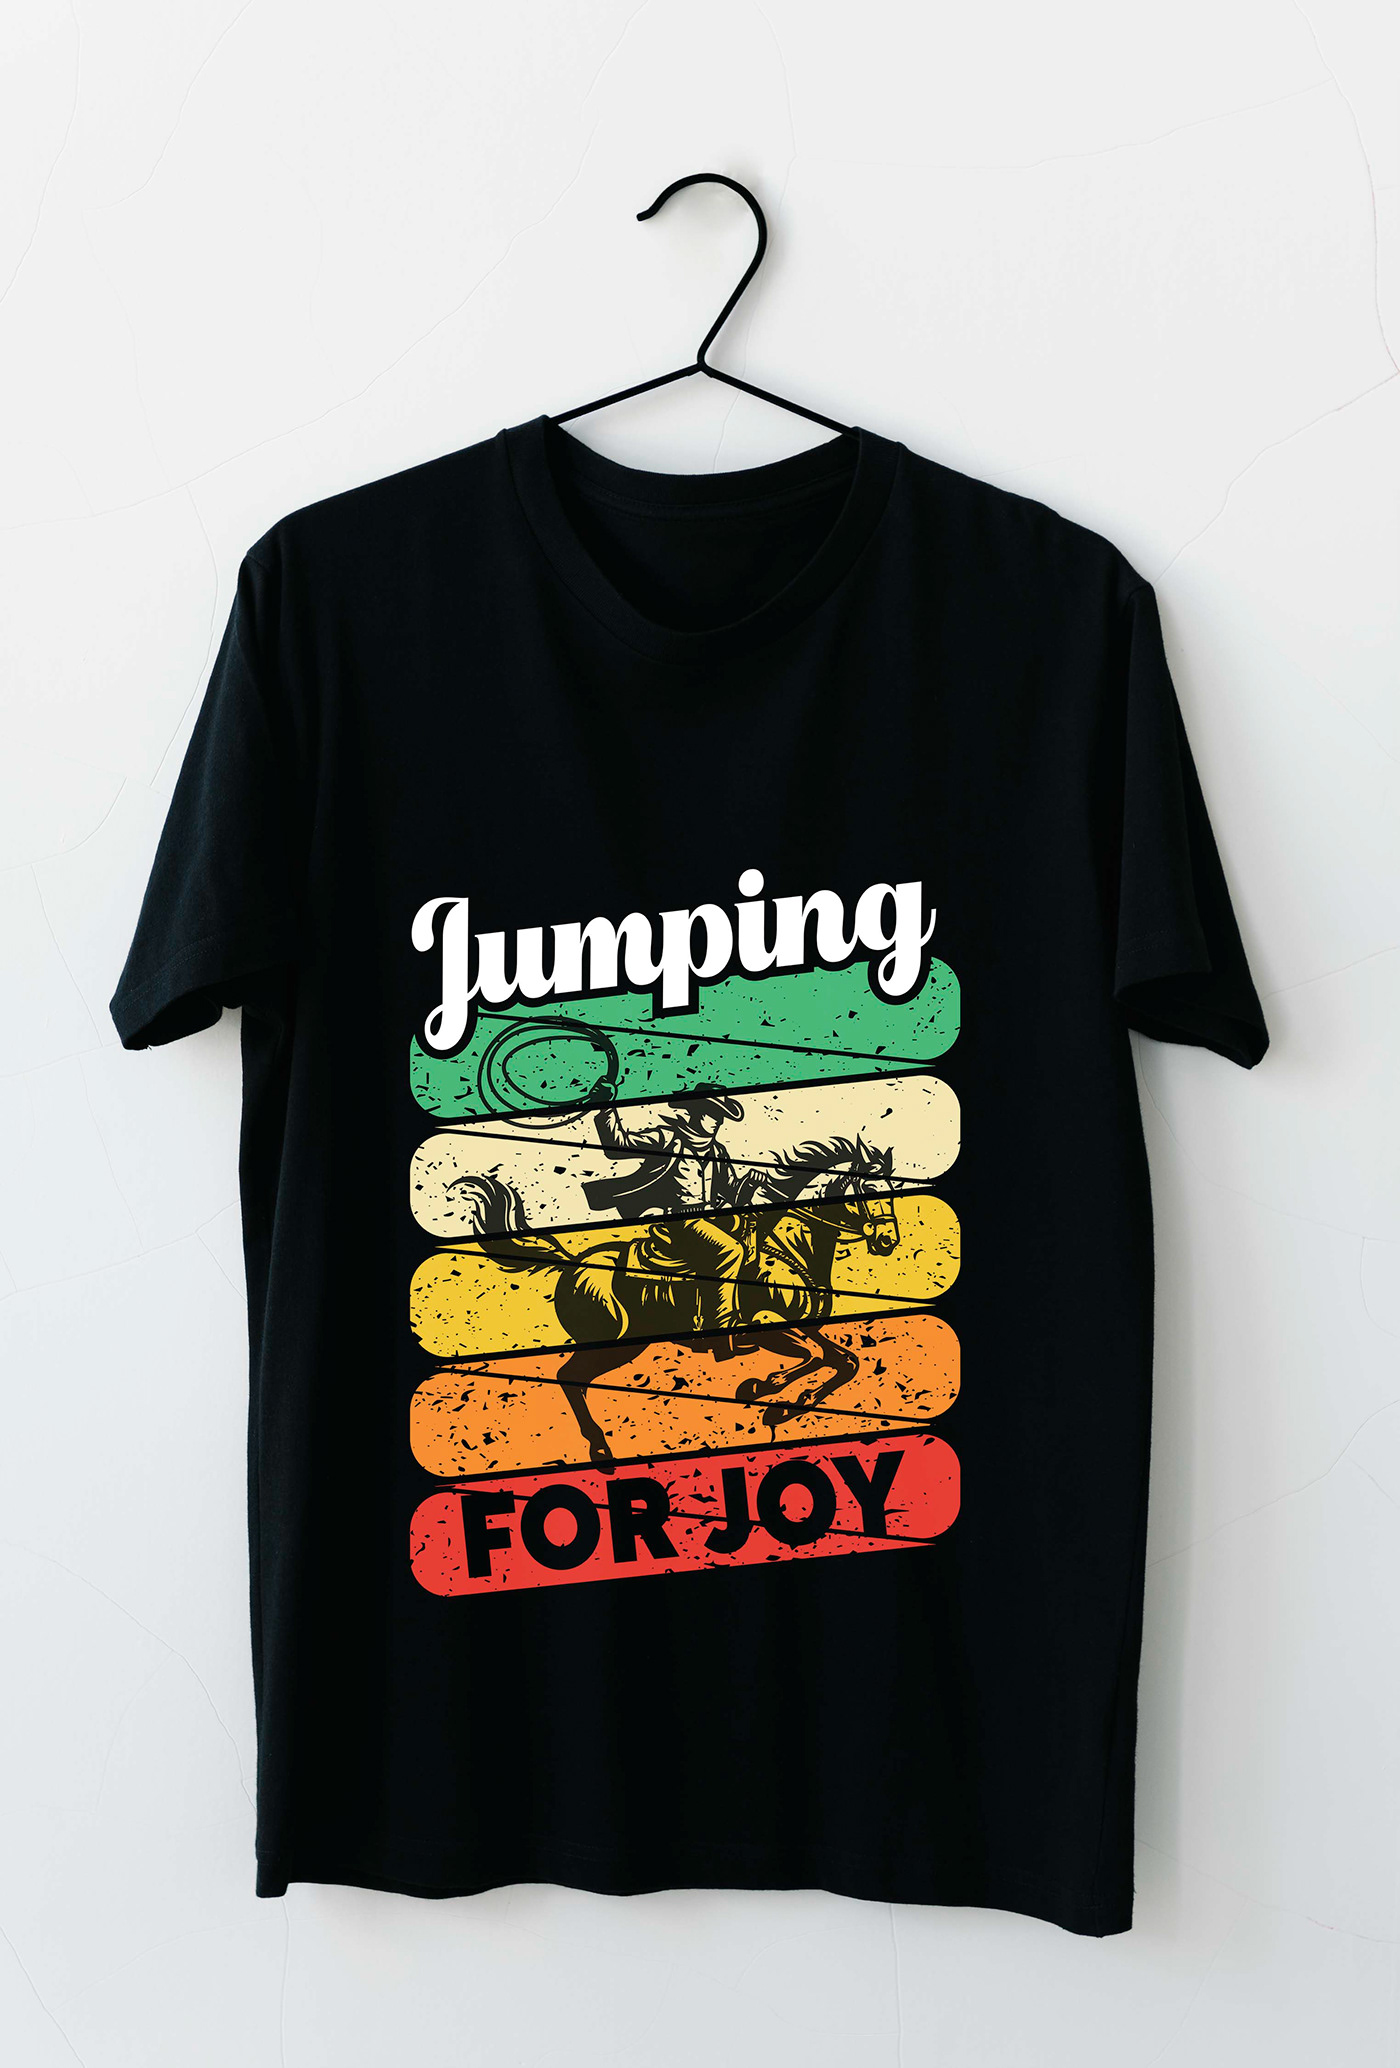 t-shirt typography   jumping horse t-shirt design